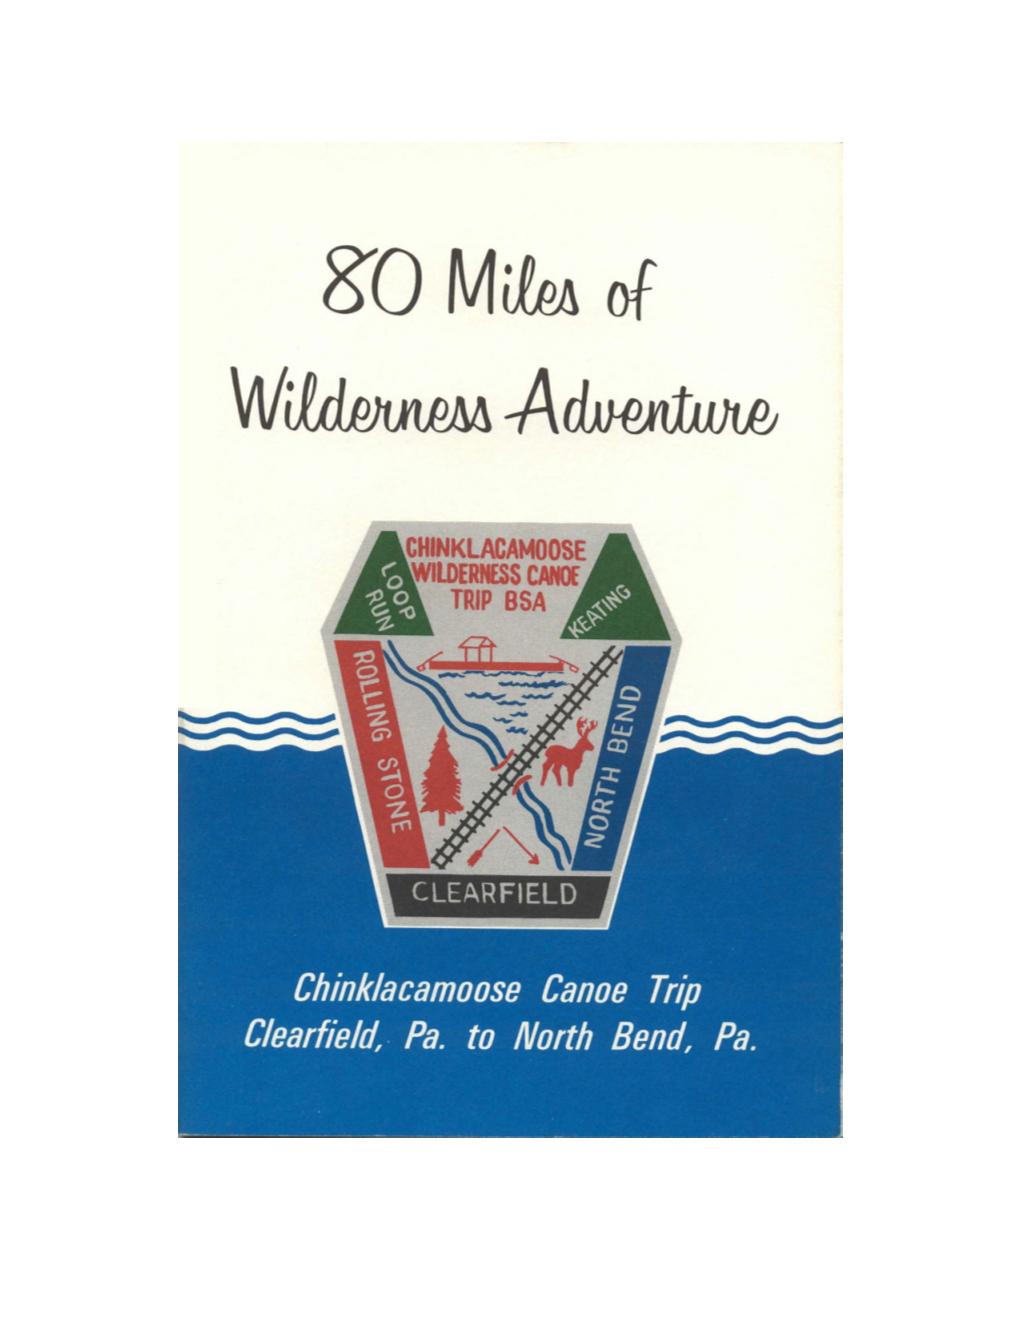 80 Miles of Wilderness Adventure